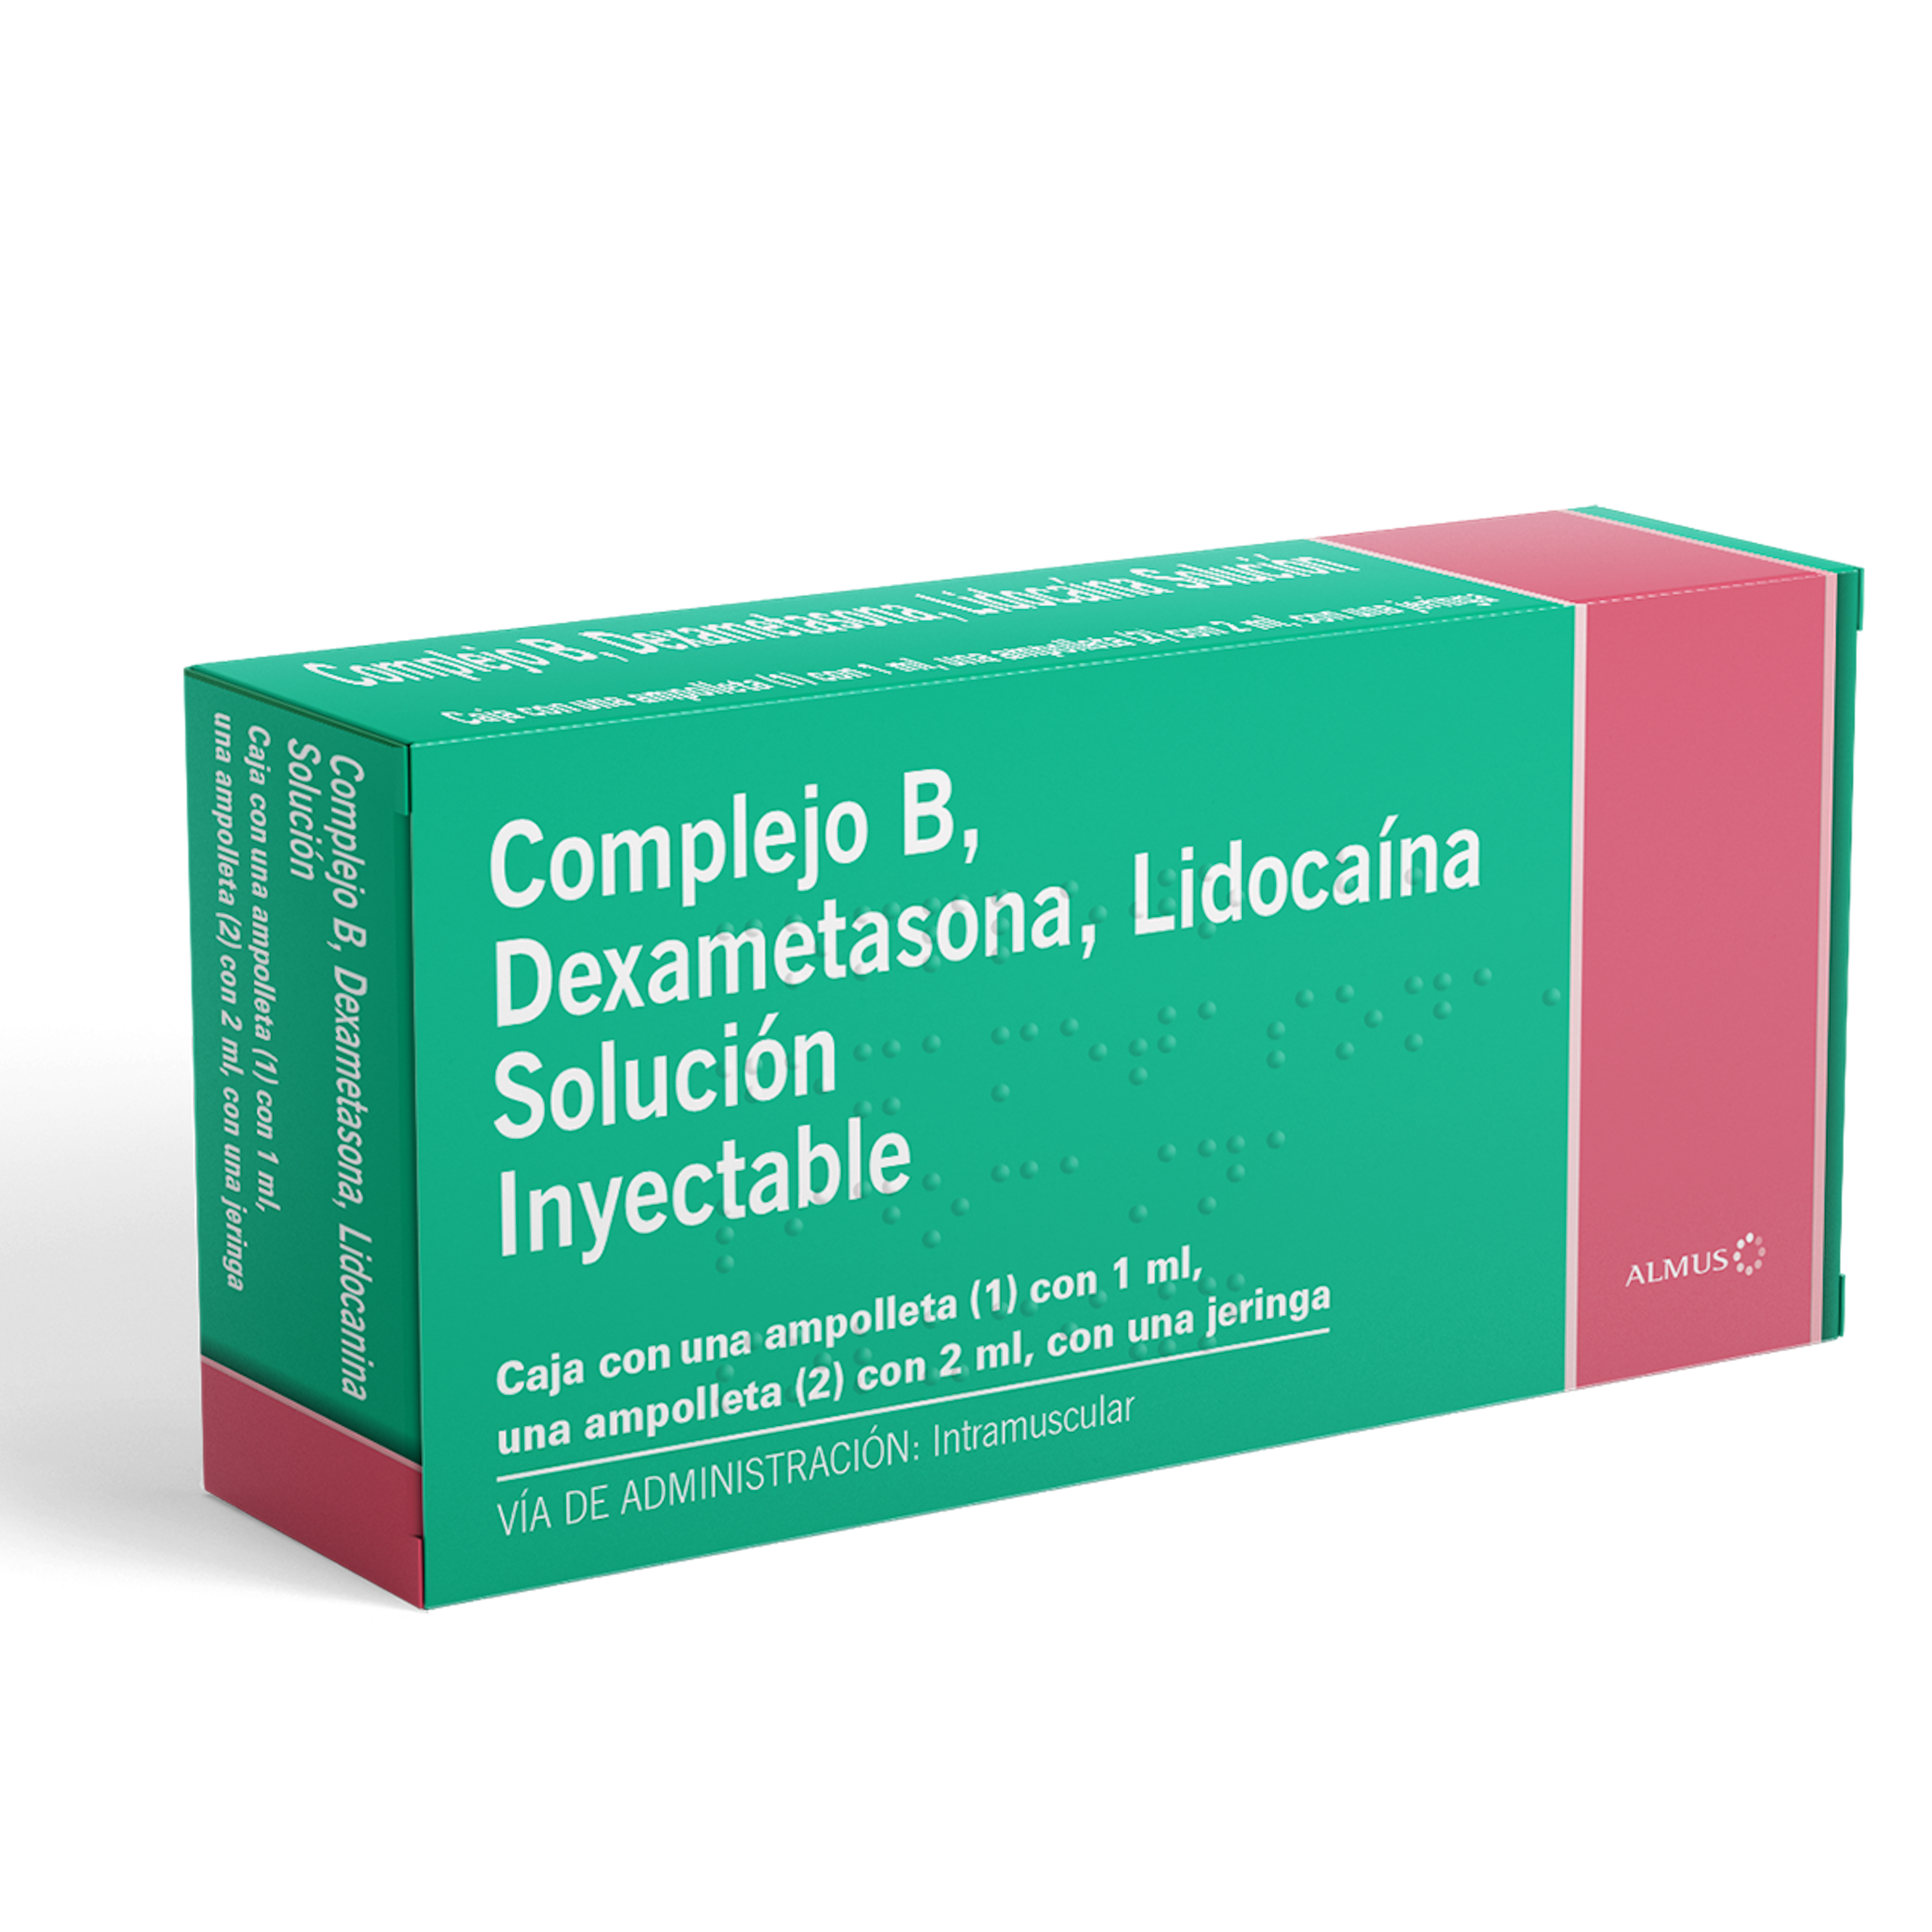 Complejo B Dexametasona, Lidocaína